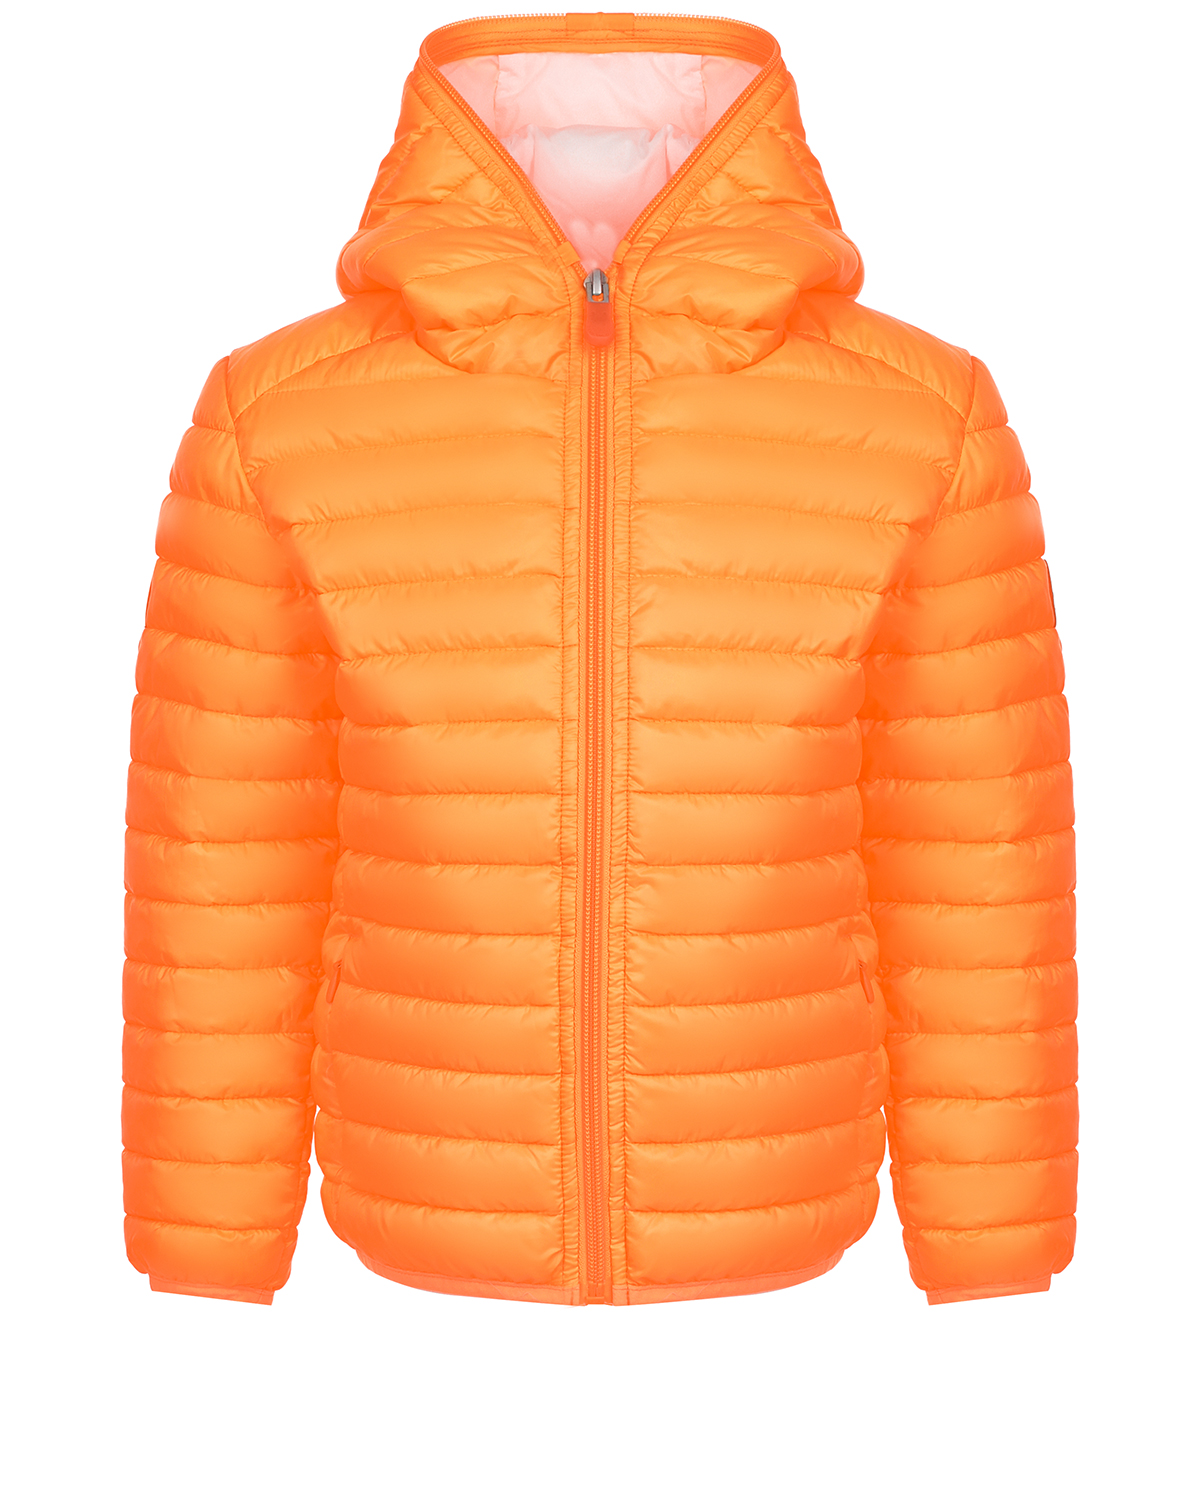 Оранжевая нейлоновая куртка Save the Duck